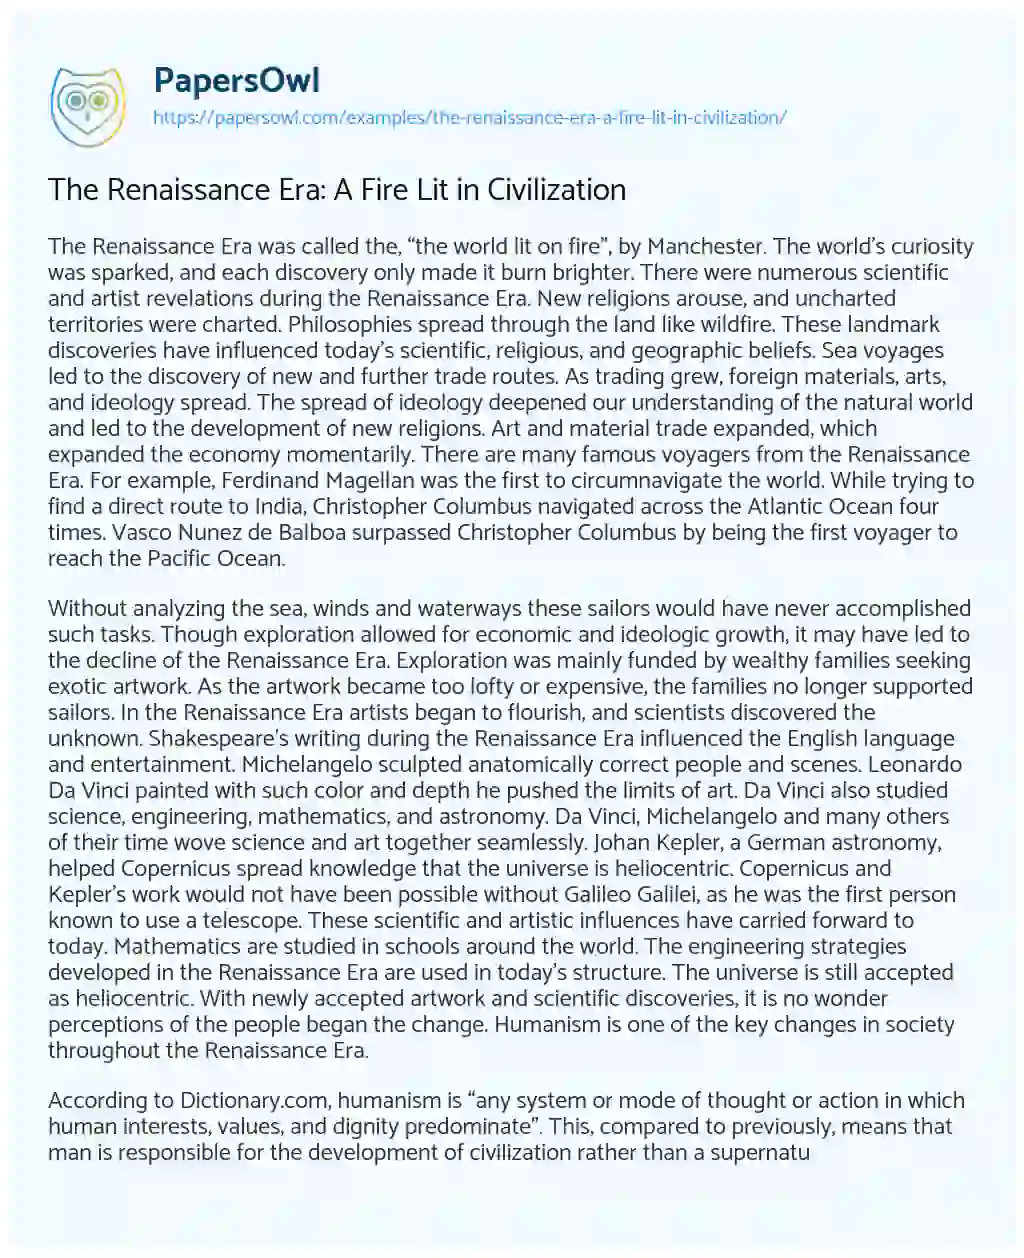 Essay on The Renaissance Era: a Fire Lit in Civilization